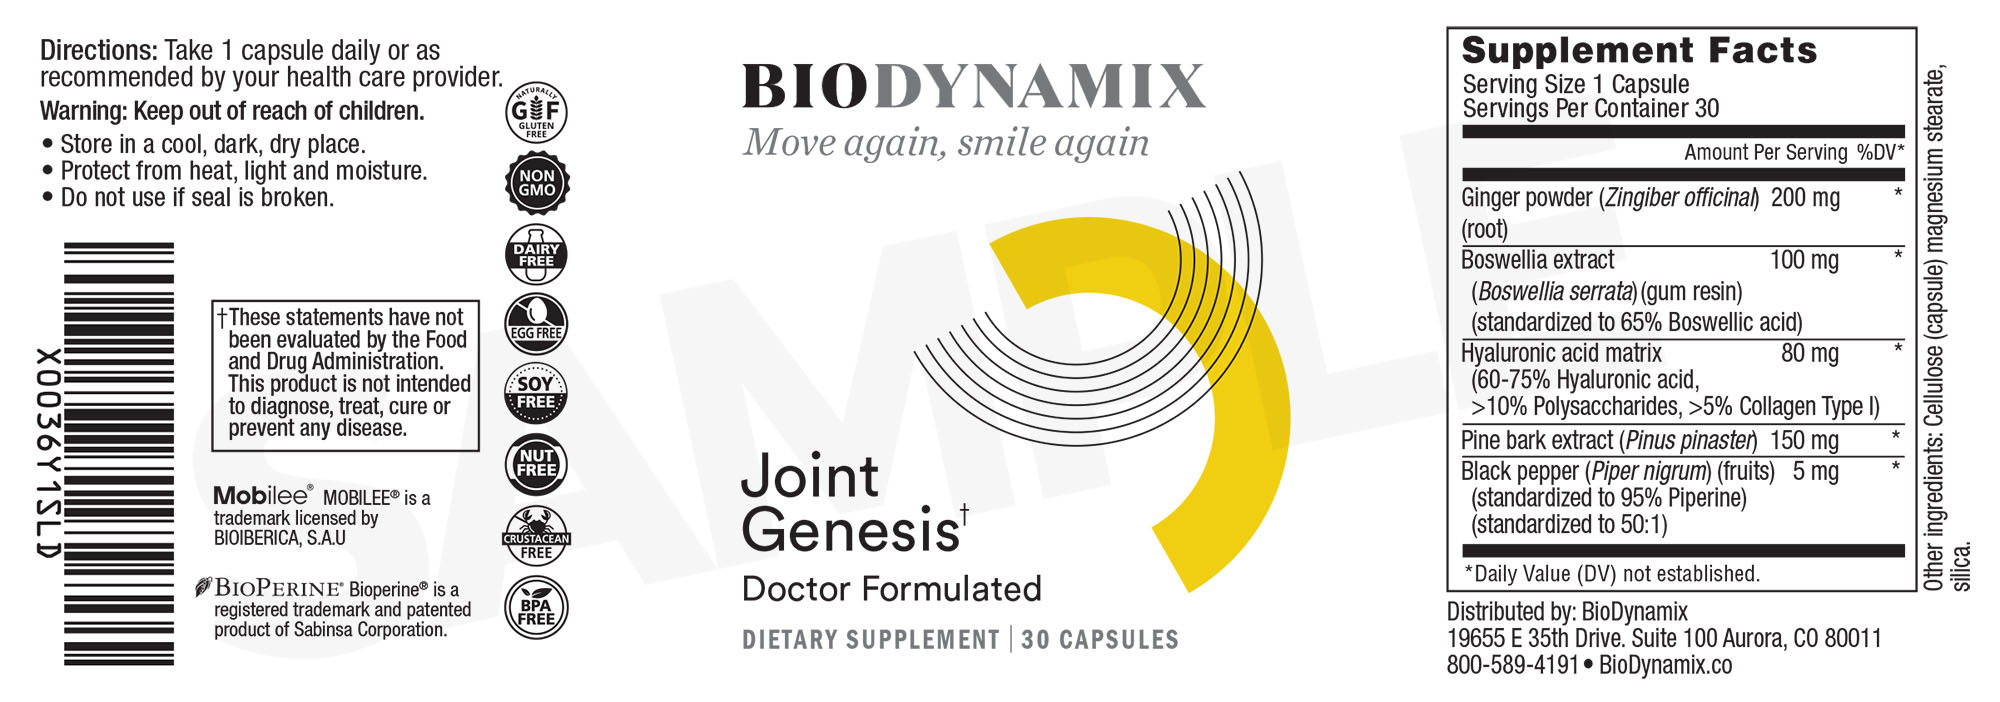 BioDynamix Joint Genesis Supplement Facts